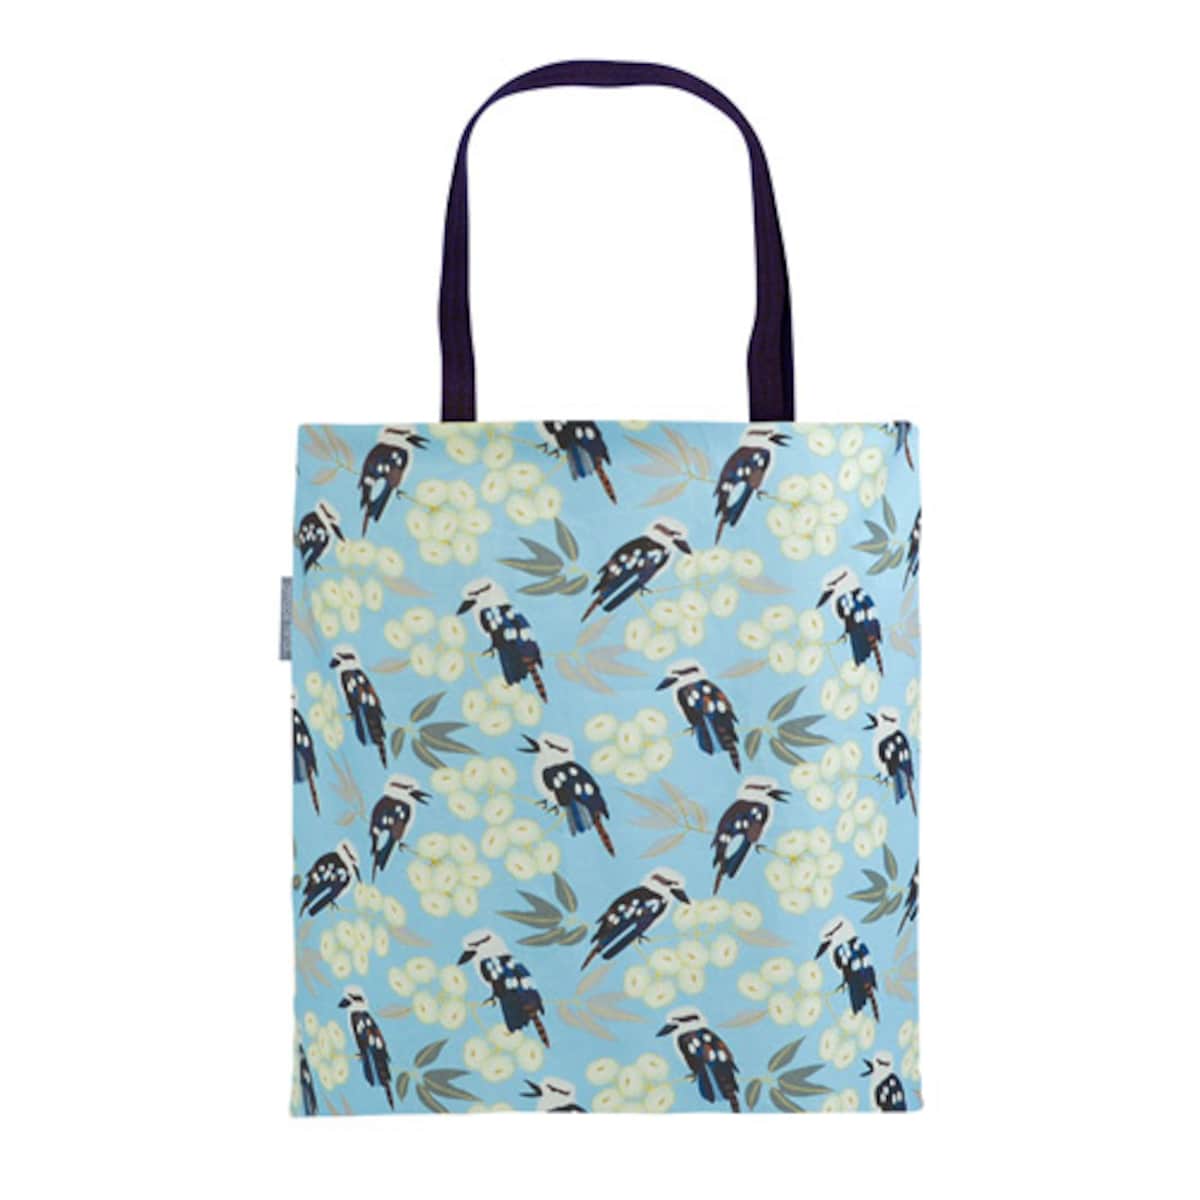 Annabel Trends Fabric Shopping Tote Kookaburra